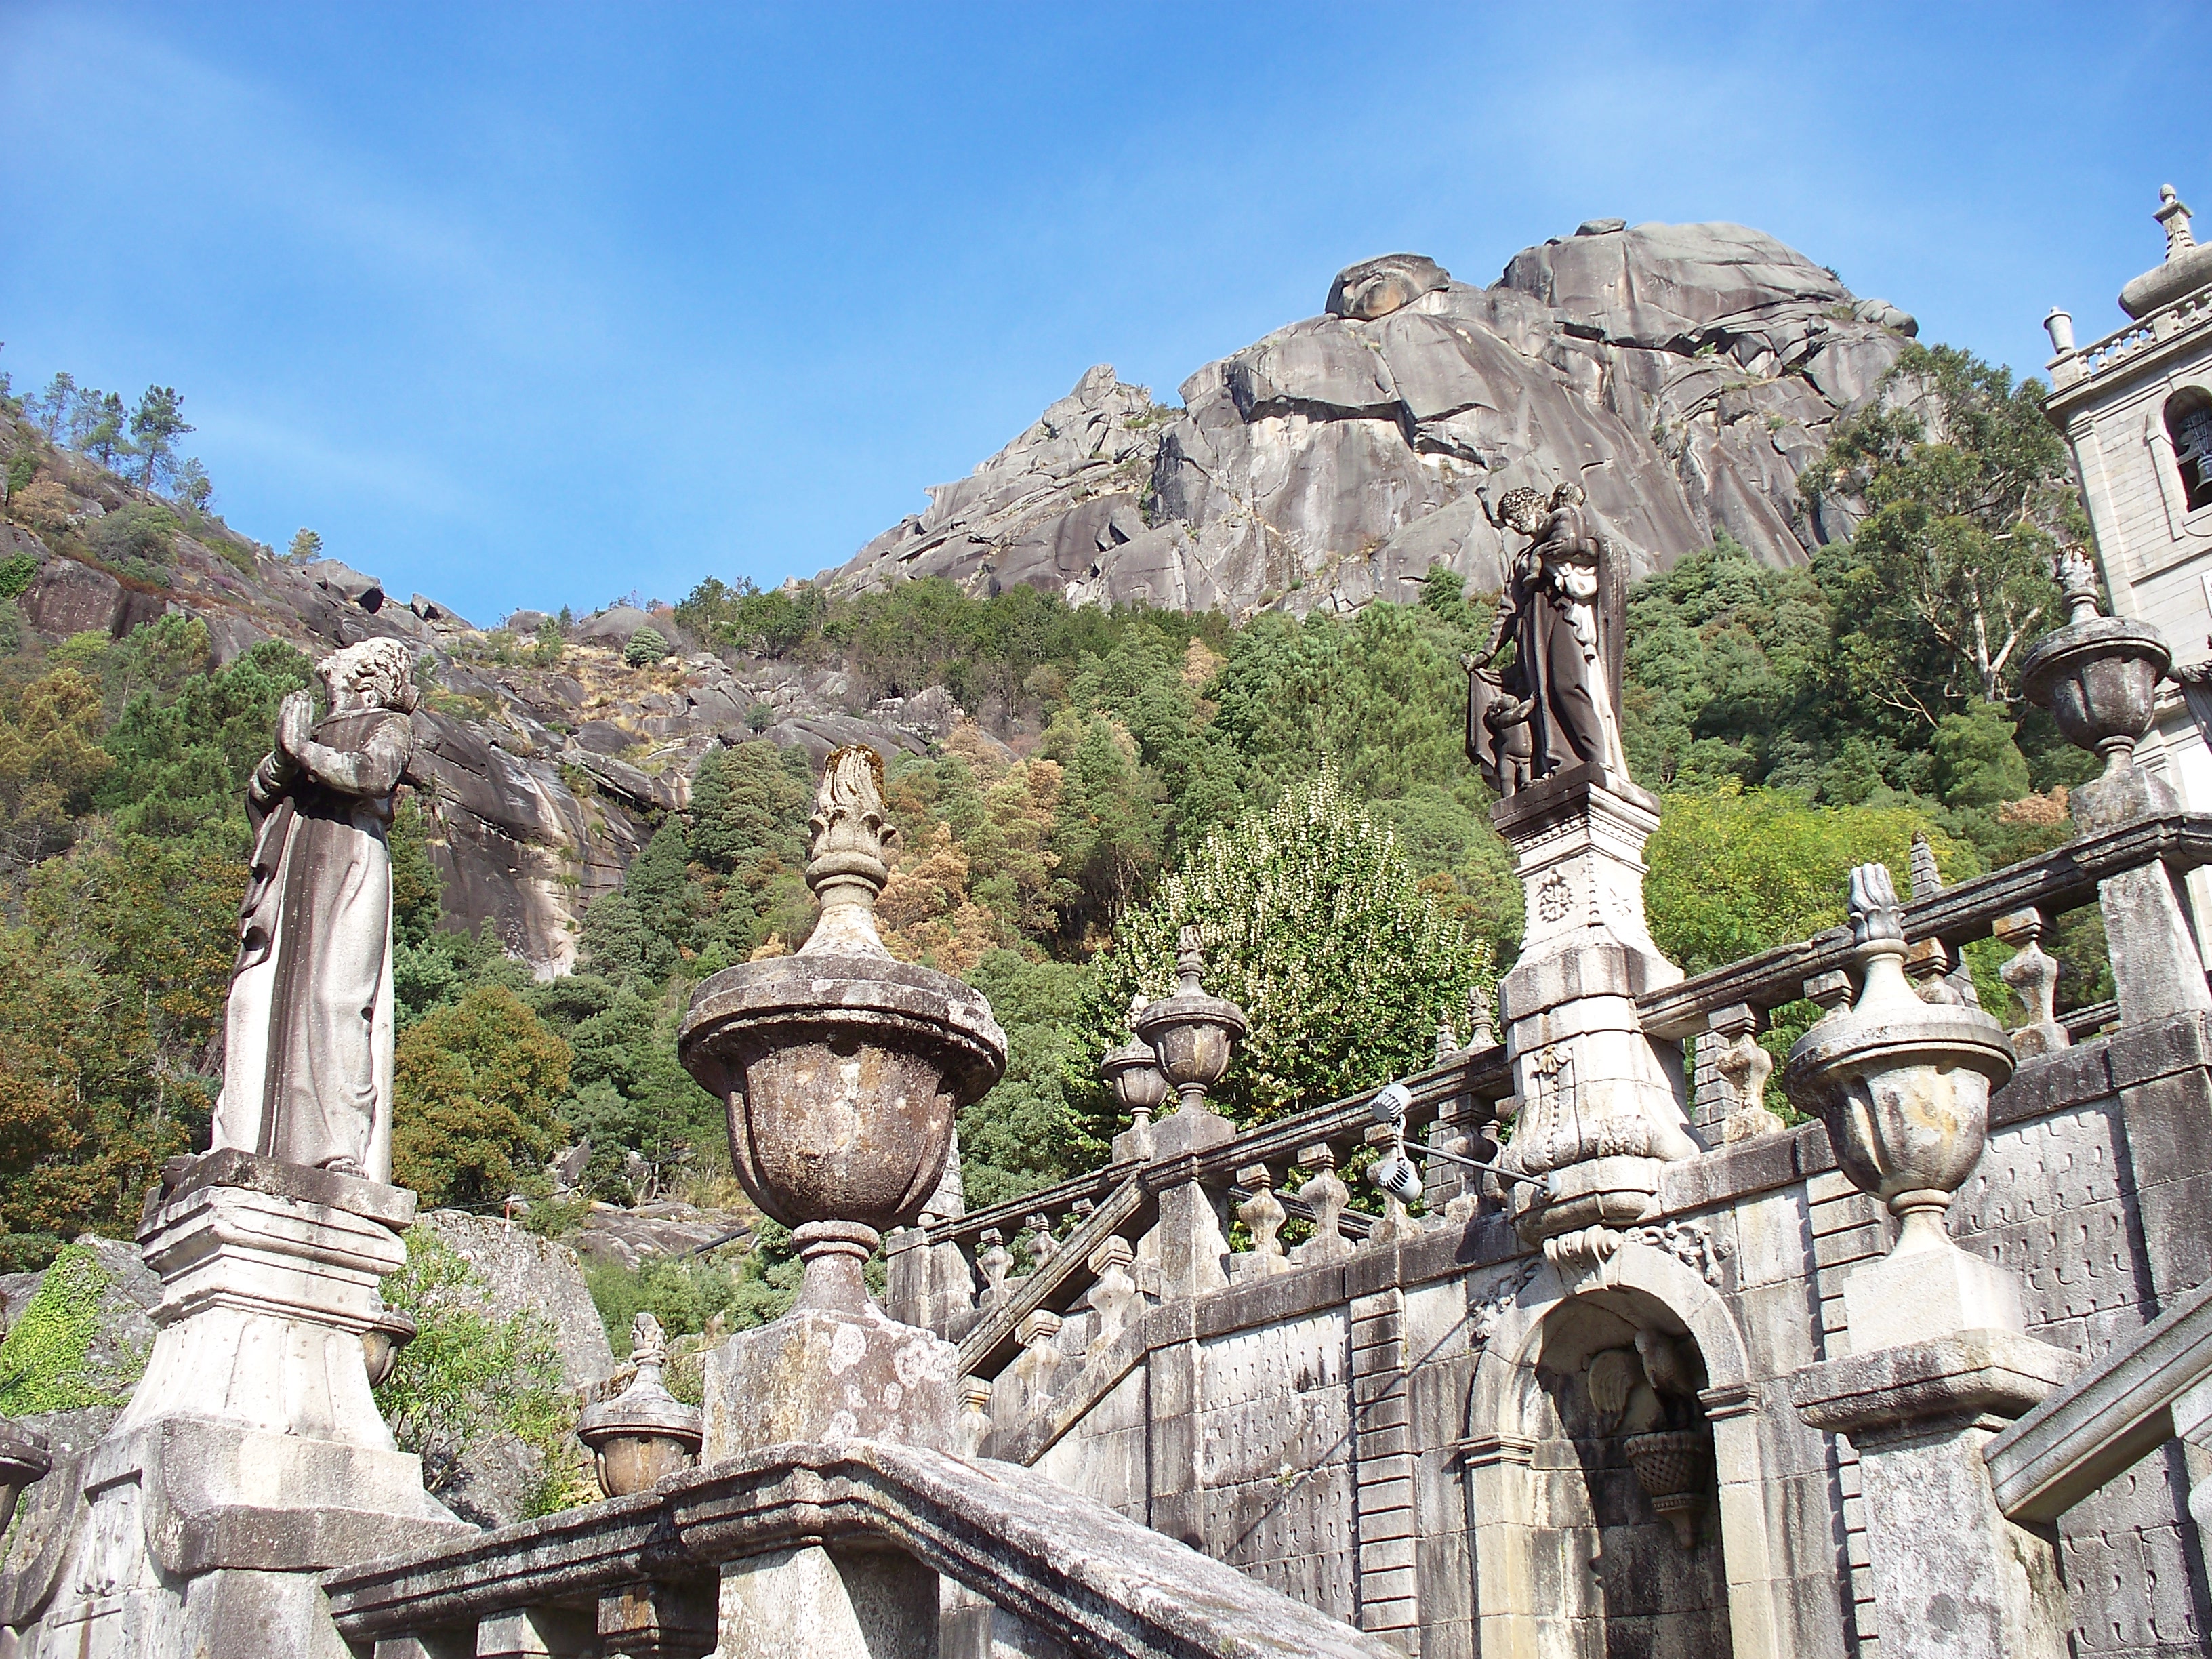 The pilgrimage church of Nossa Senora is set between mountain ridges.